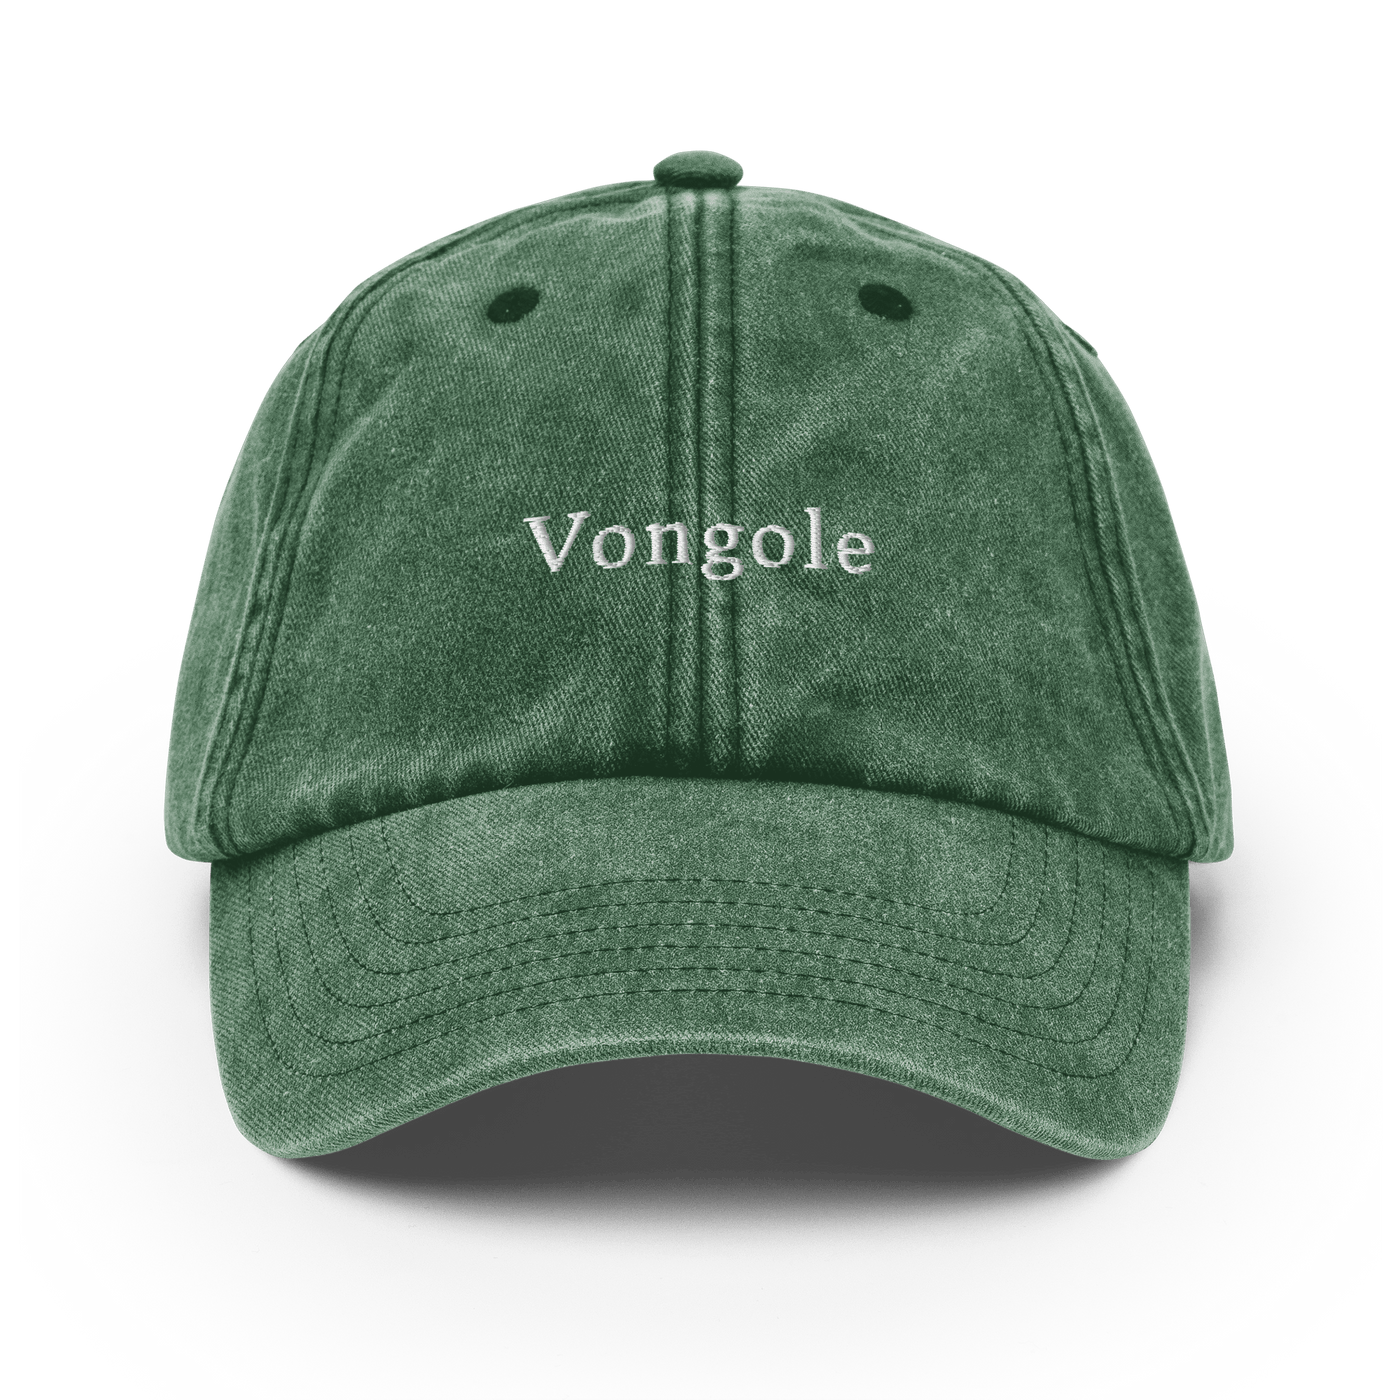 Vongole Vintage Hat - Vintage Bottle Green - - Just Another Cap Store